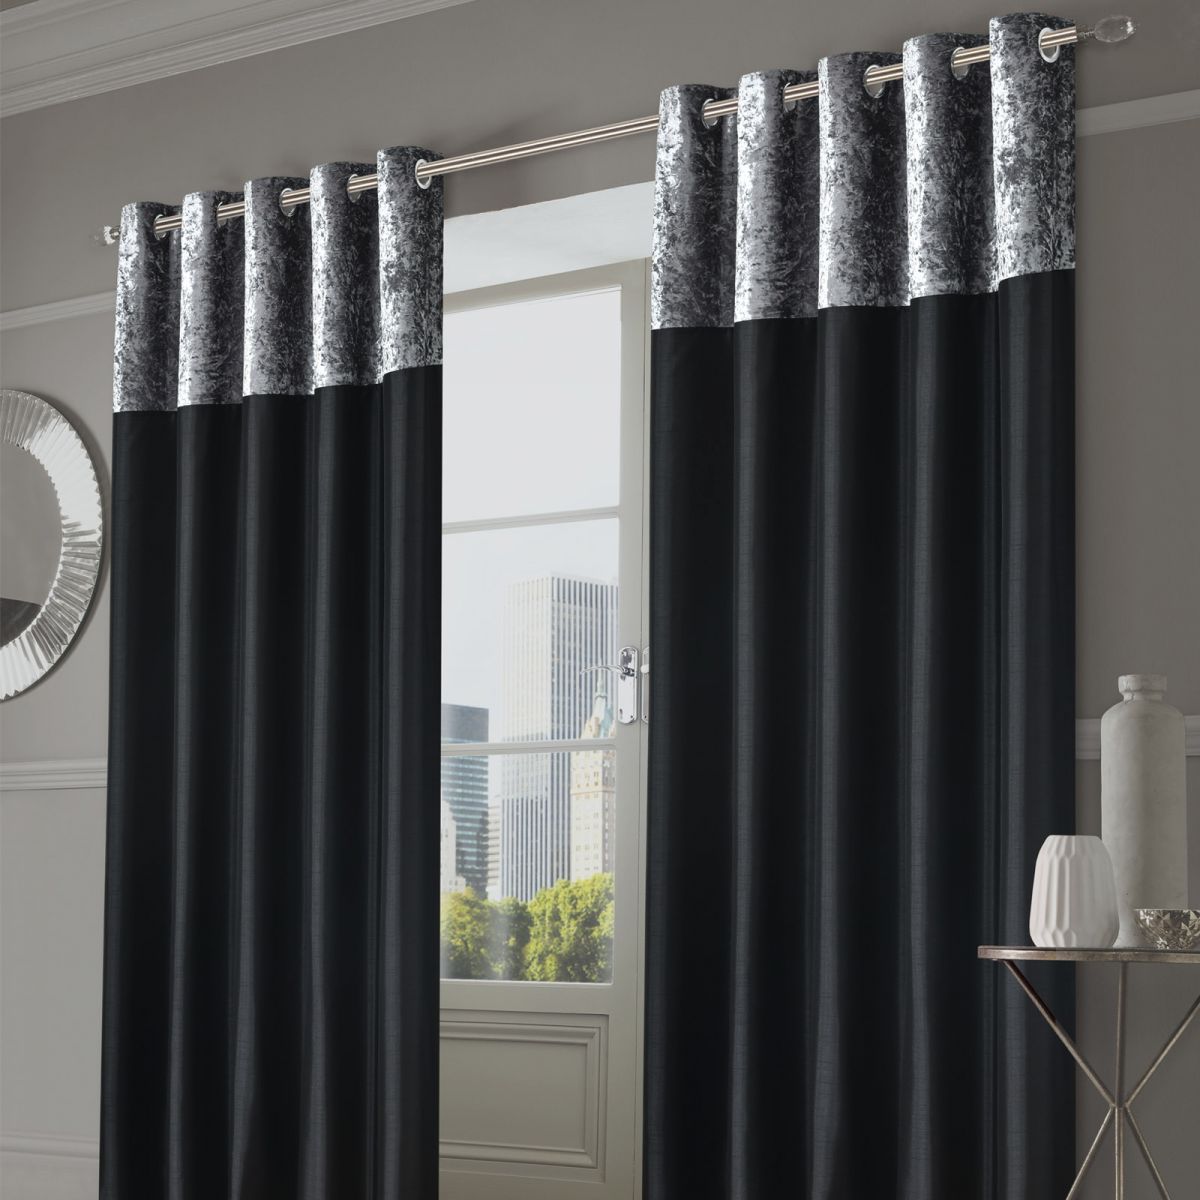 Sienna Home Manhattan Crushed Velvet Band Eyelet Curtains - Black, 90" x 90"